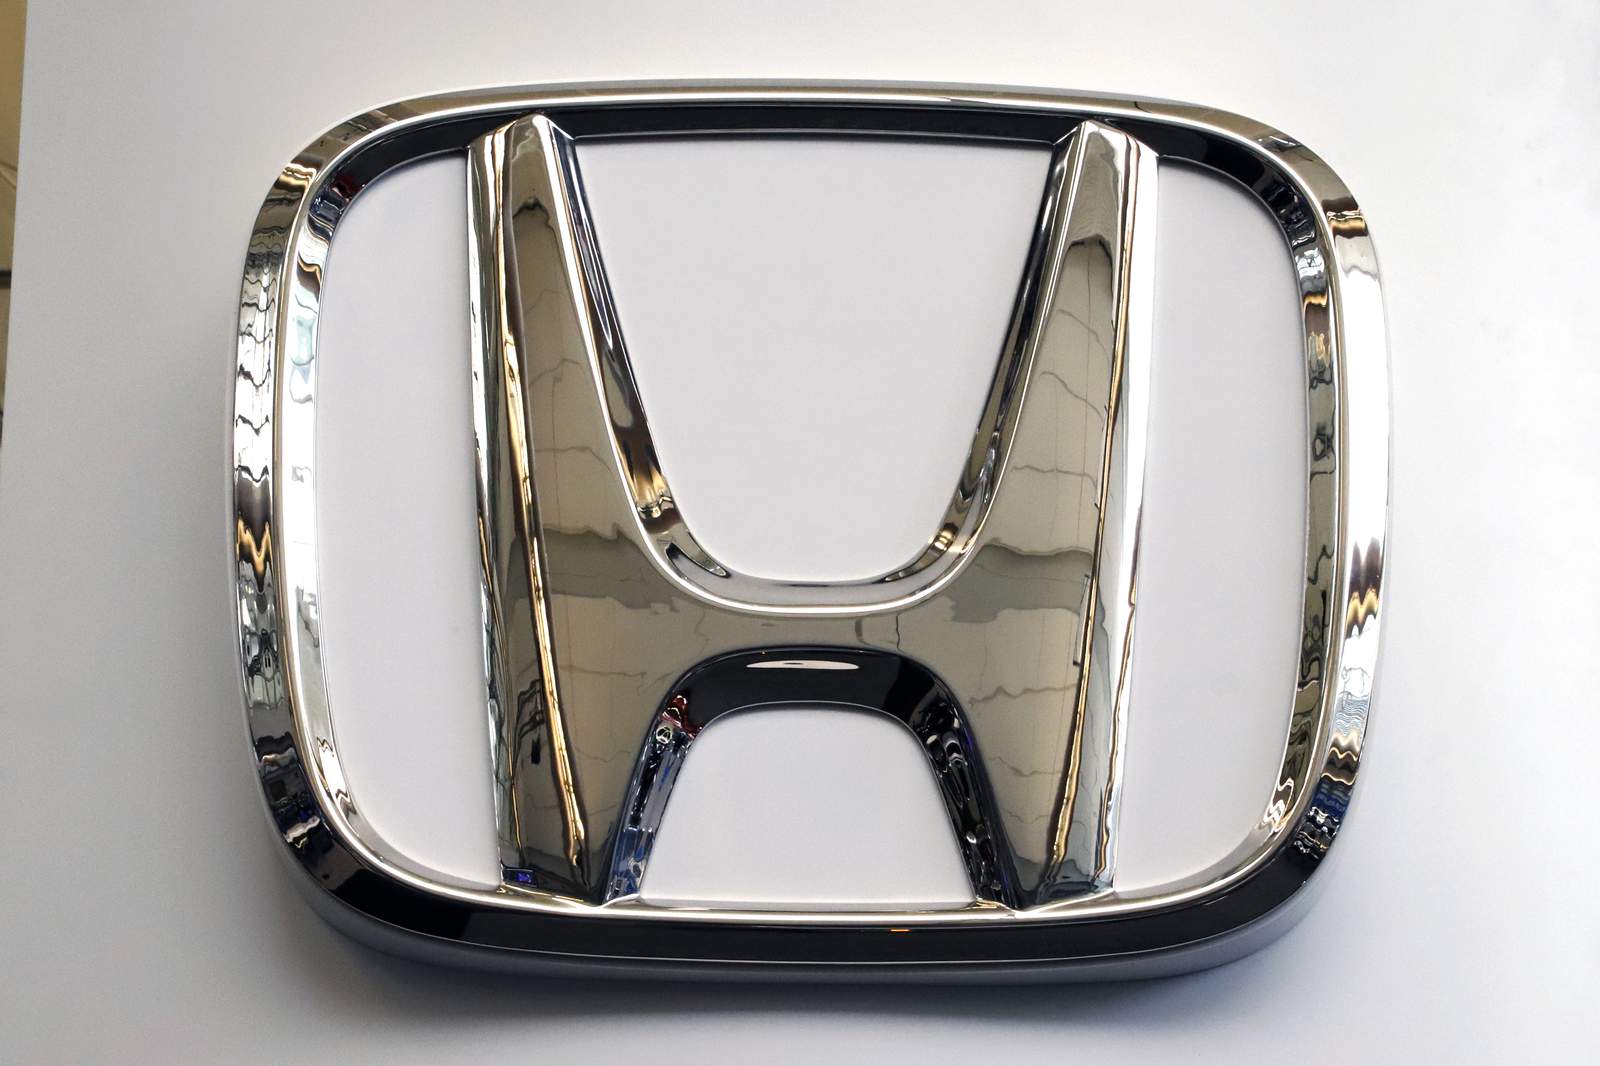 Honda recalls more than 600K vehicles in US for fuel pumps